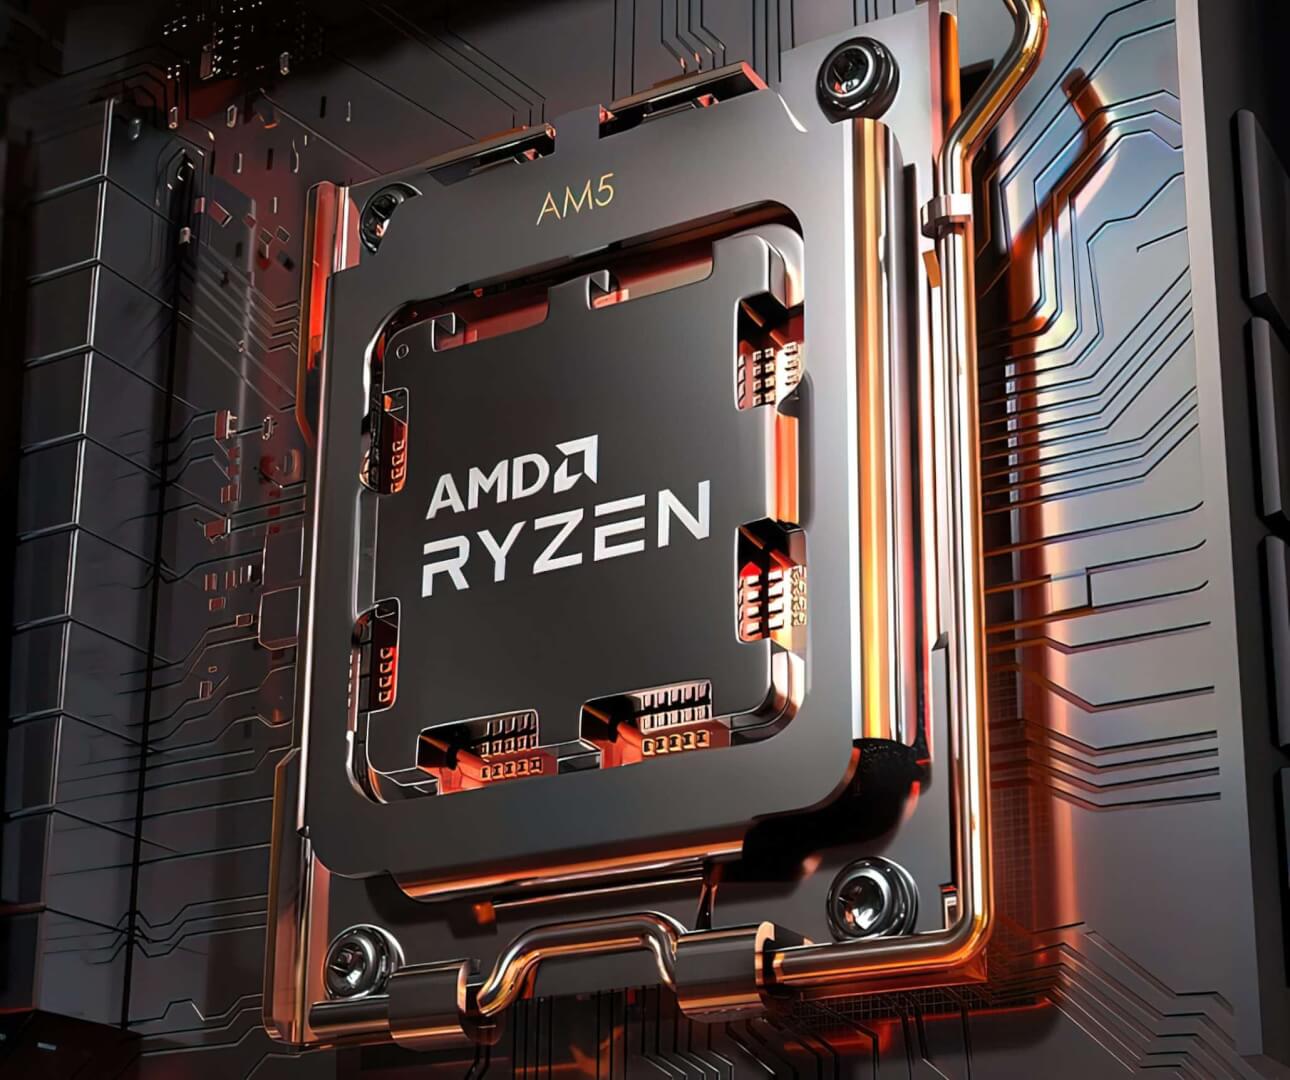 AMD dévoile ses Ryzen 7000 series, le Ryzen 5 7700X bat le Core i9-12900K  en gaming - GinjFo